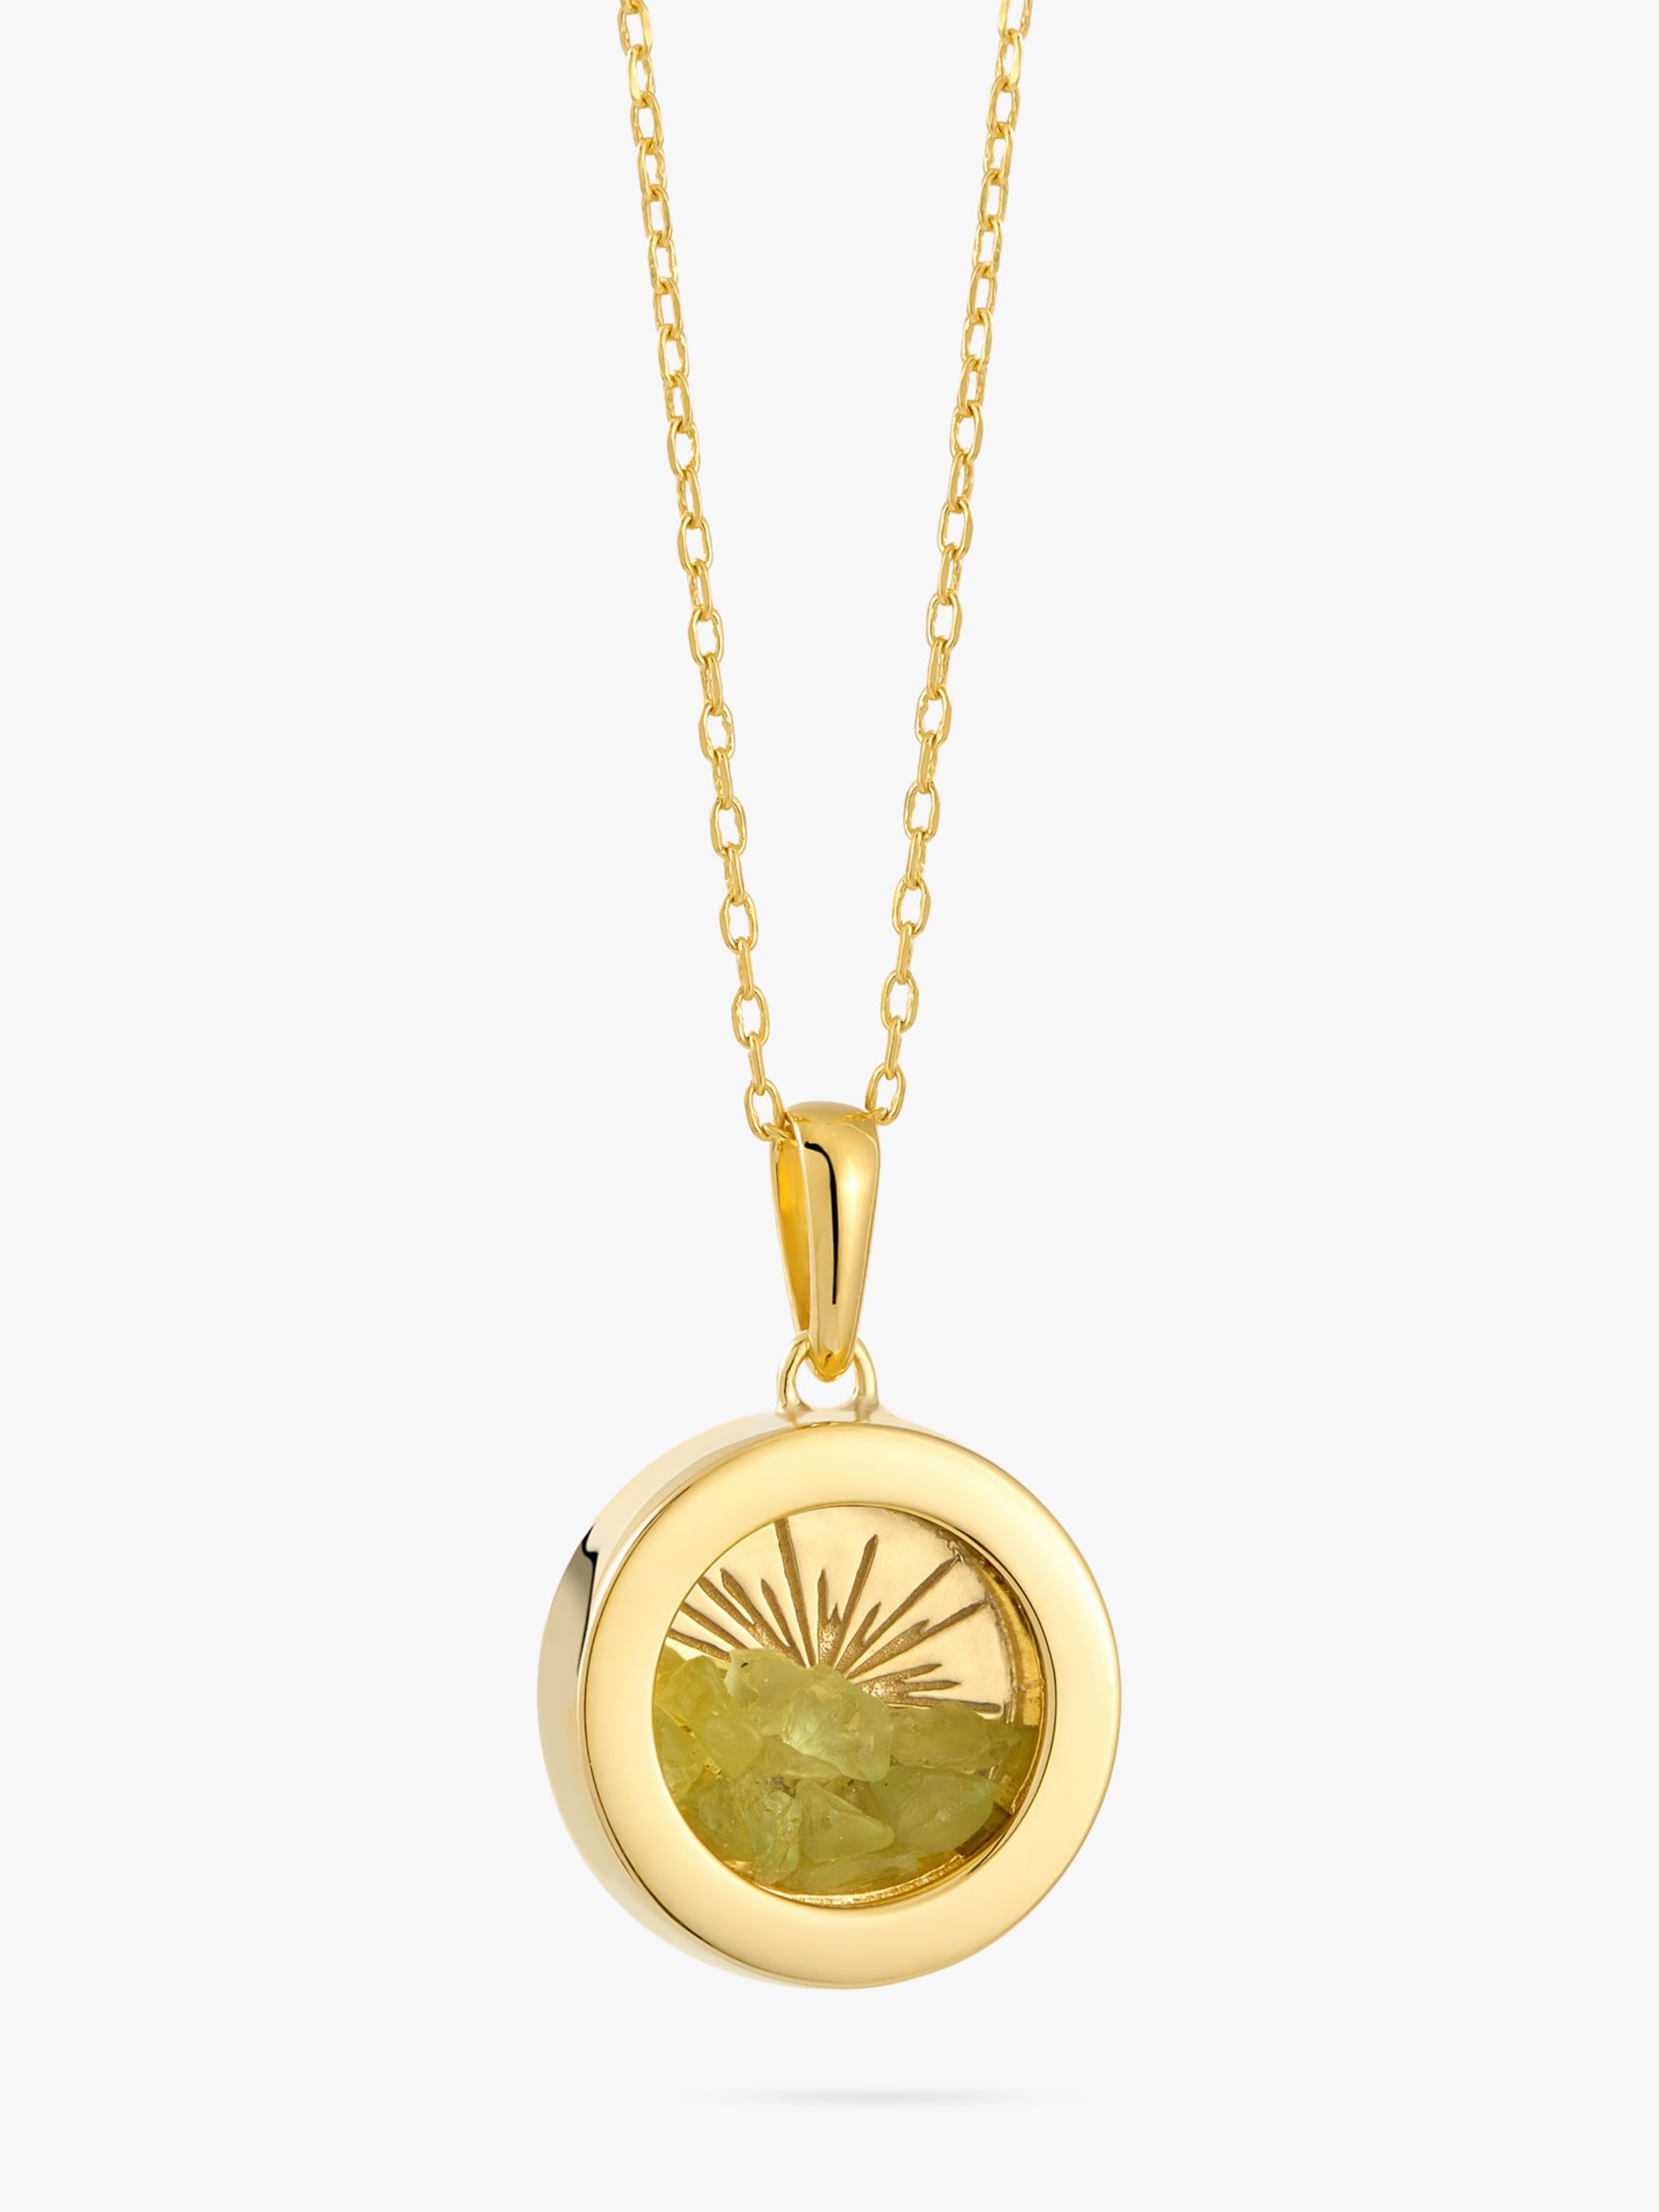 Rachel Jackson London Personalised Small Deco Sun Birthstone Amulet Necklace, Gold, Peridot - August